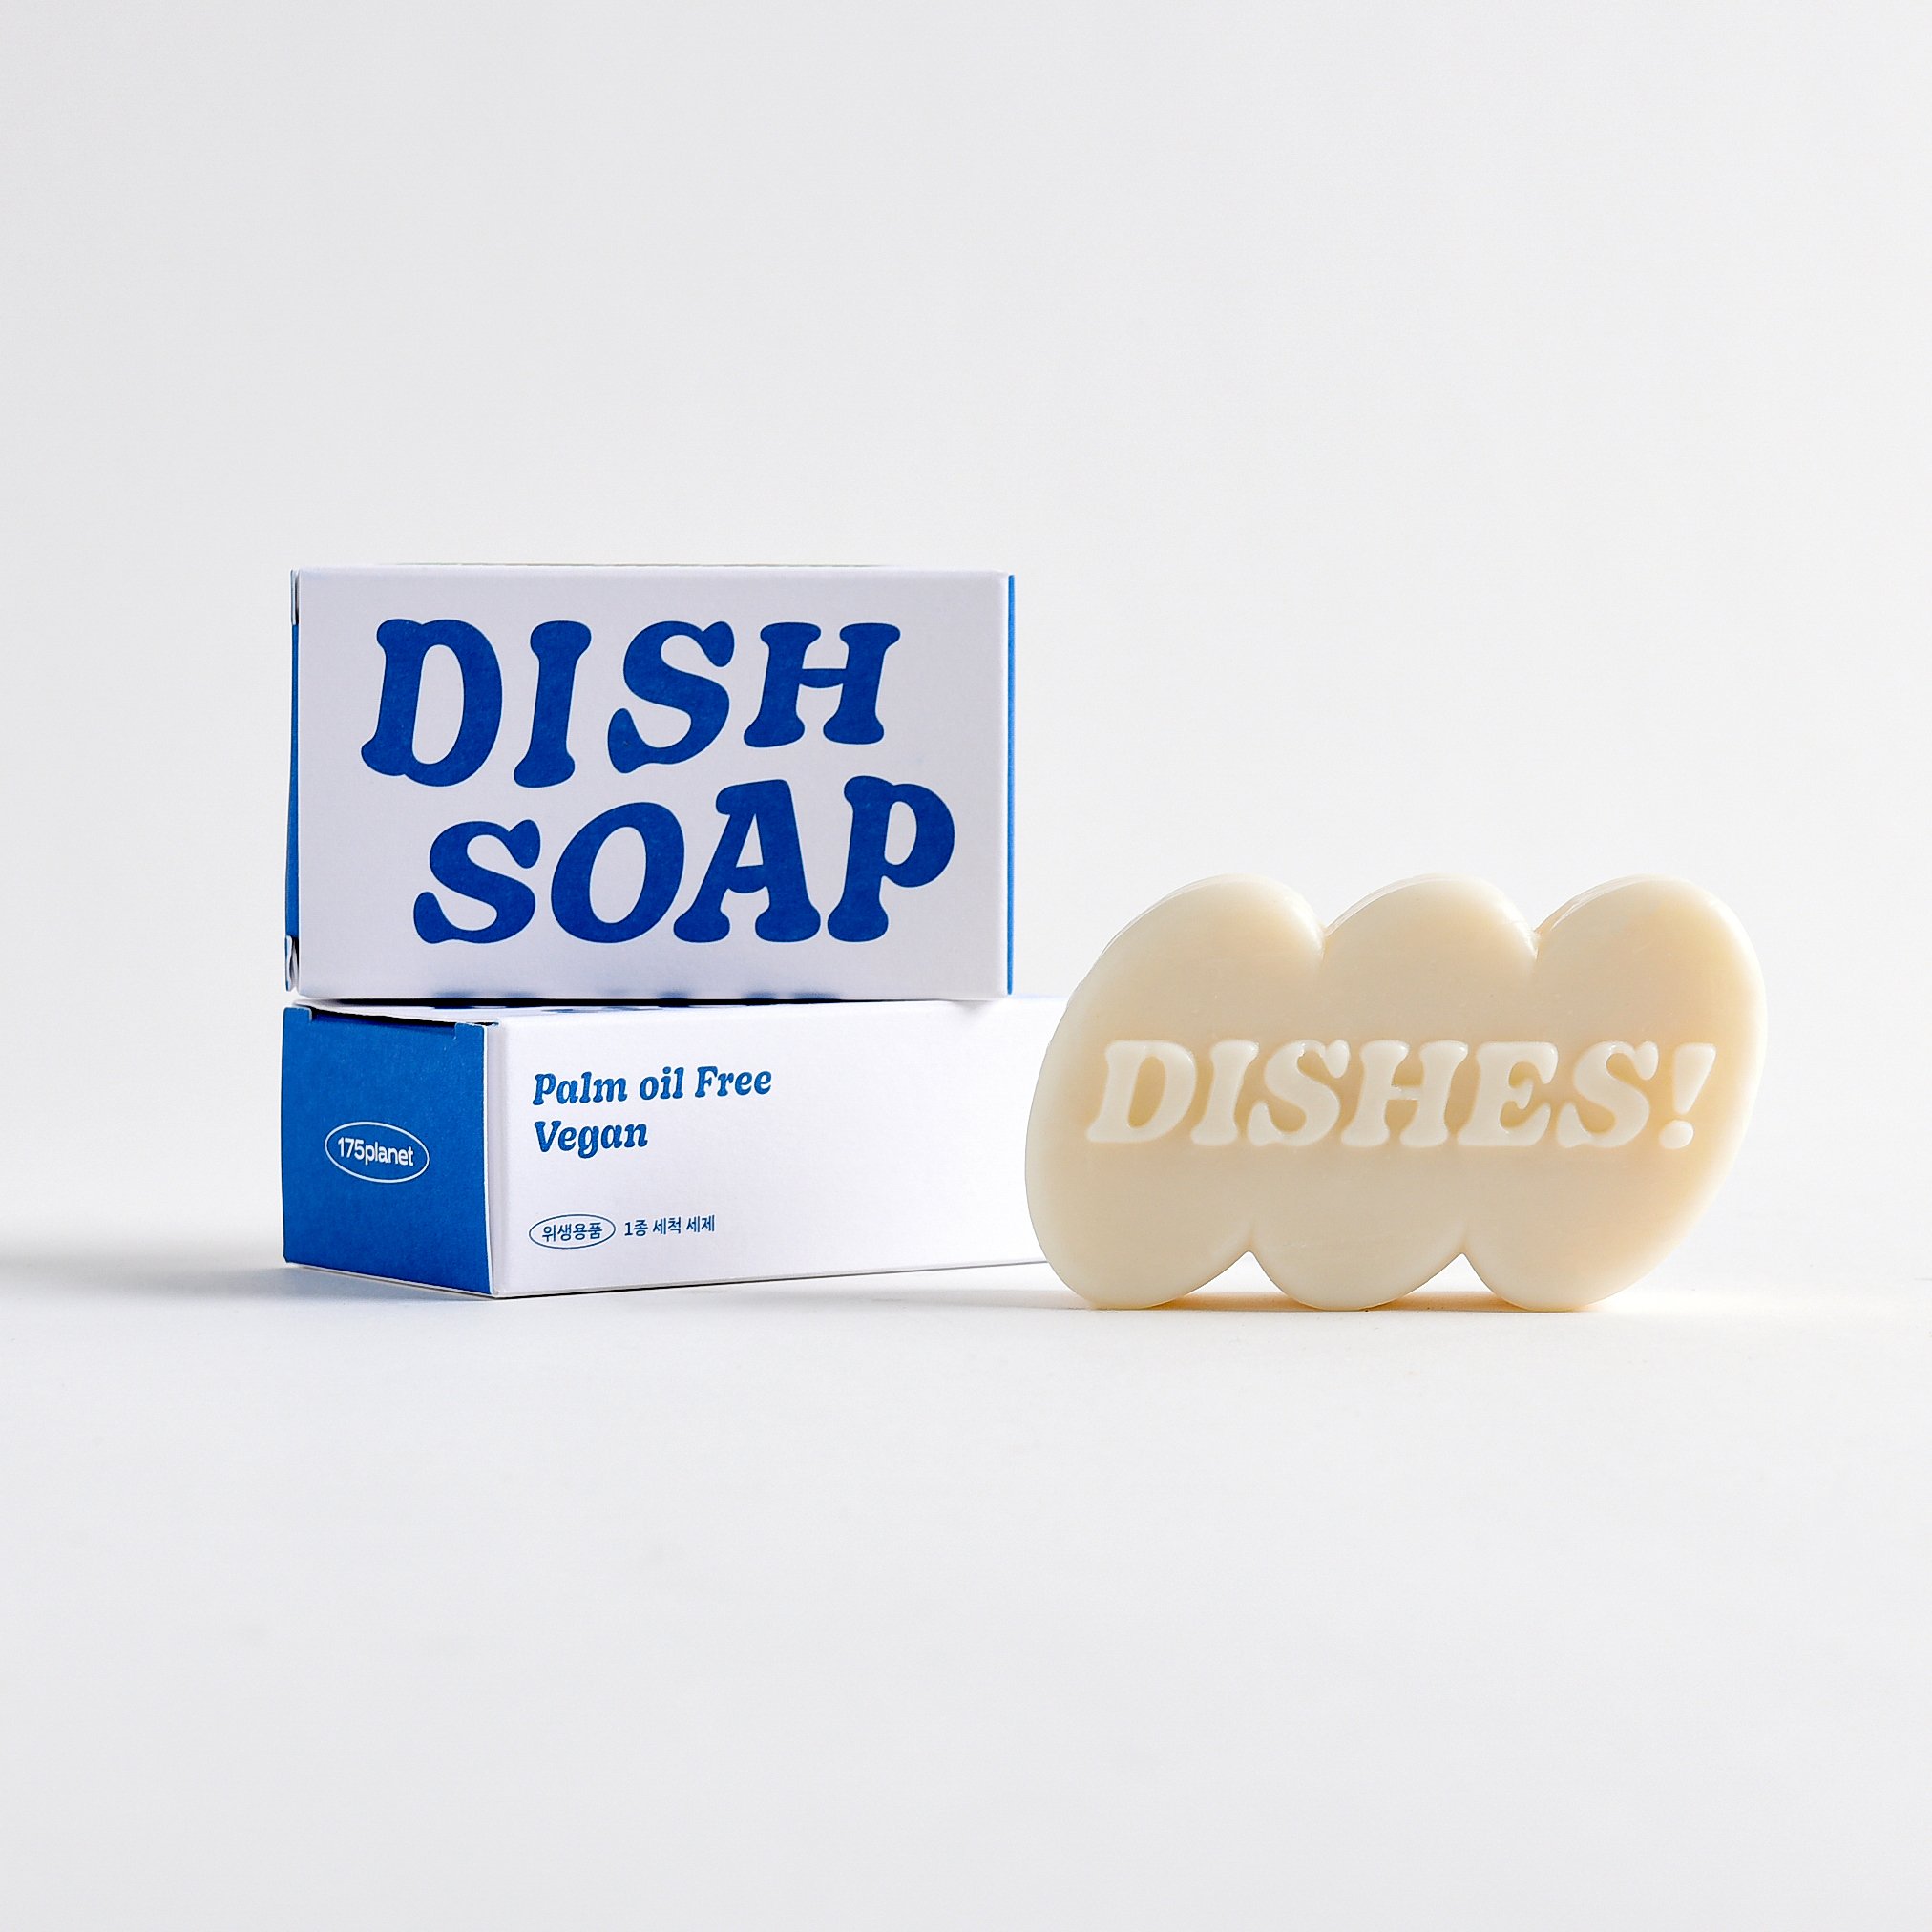 dish soap